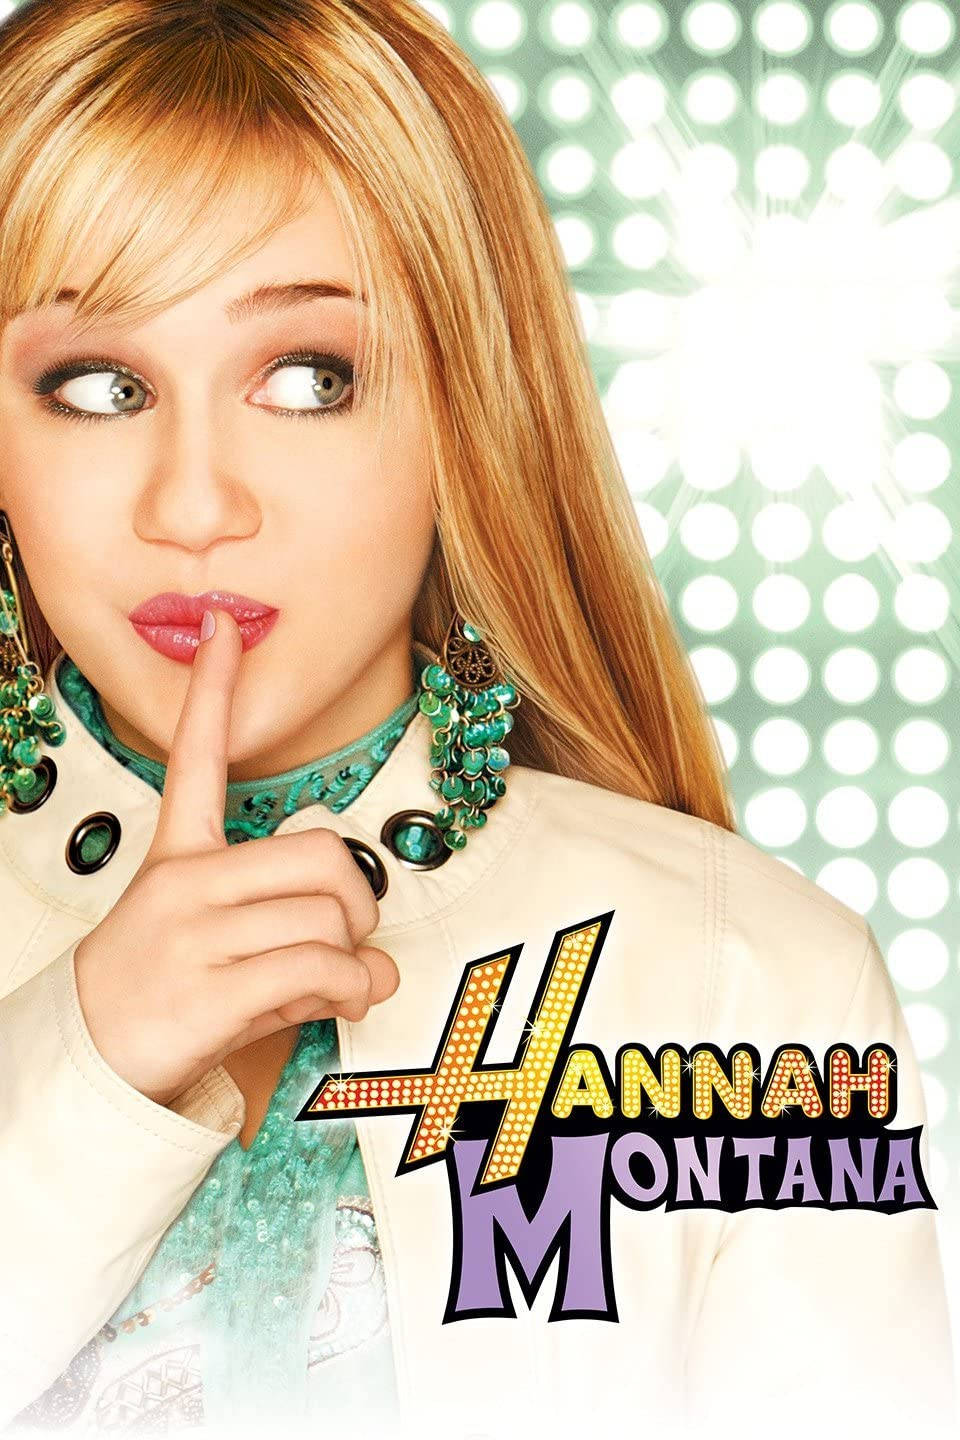 Hannah Montana Iconic Pose